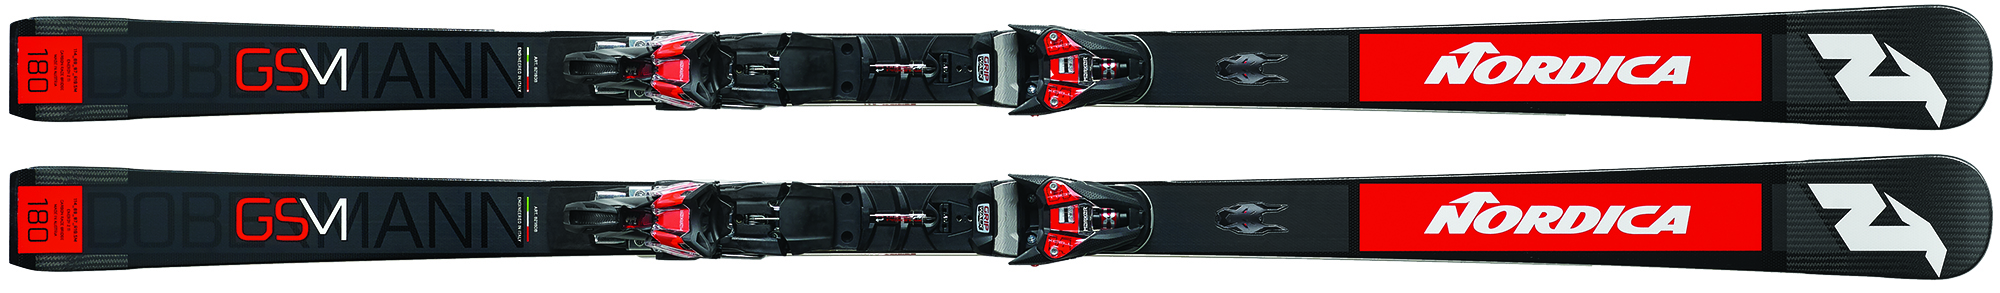 Sci nordica' Dobermann GSM RB Piston